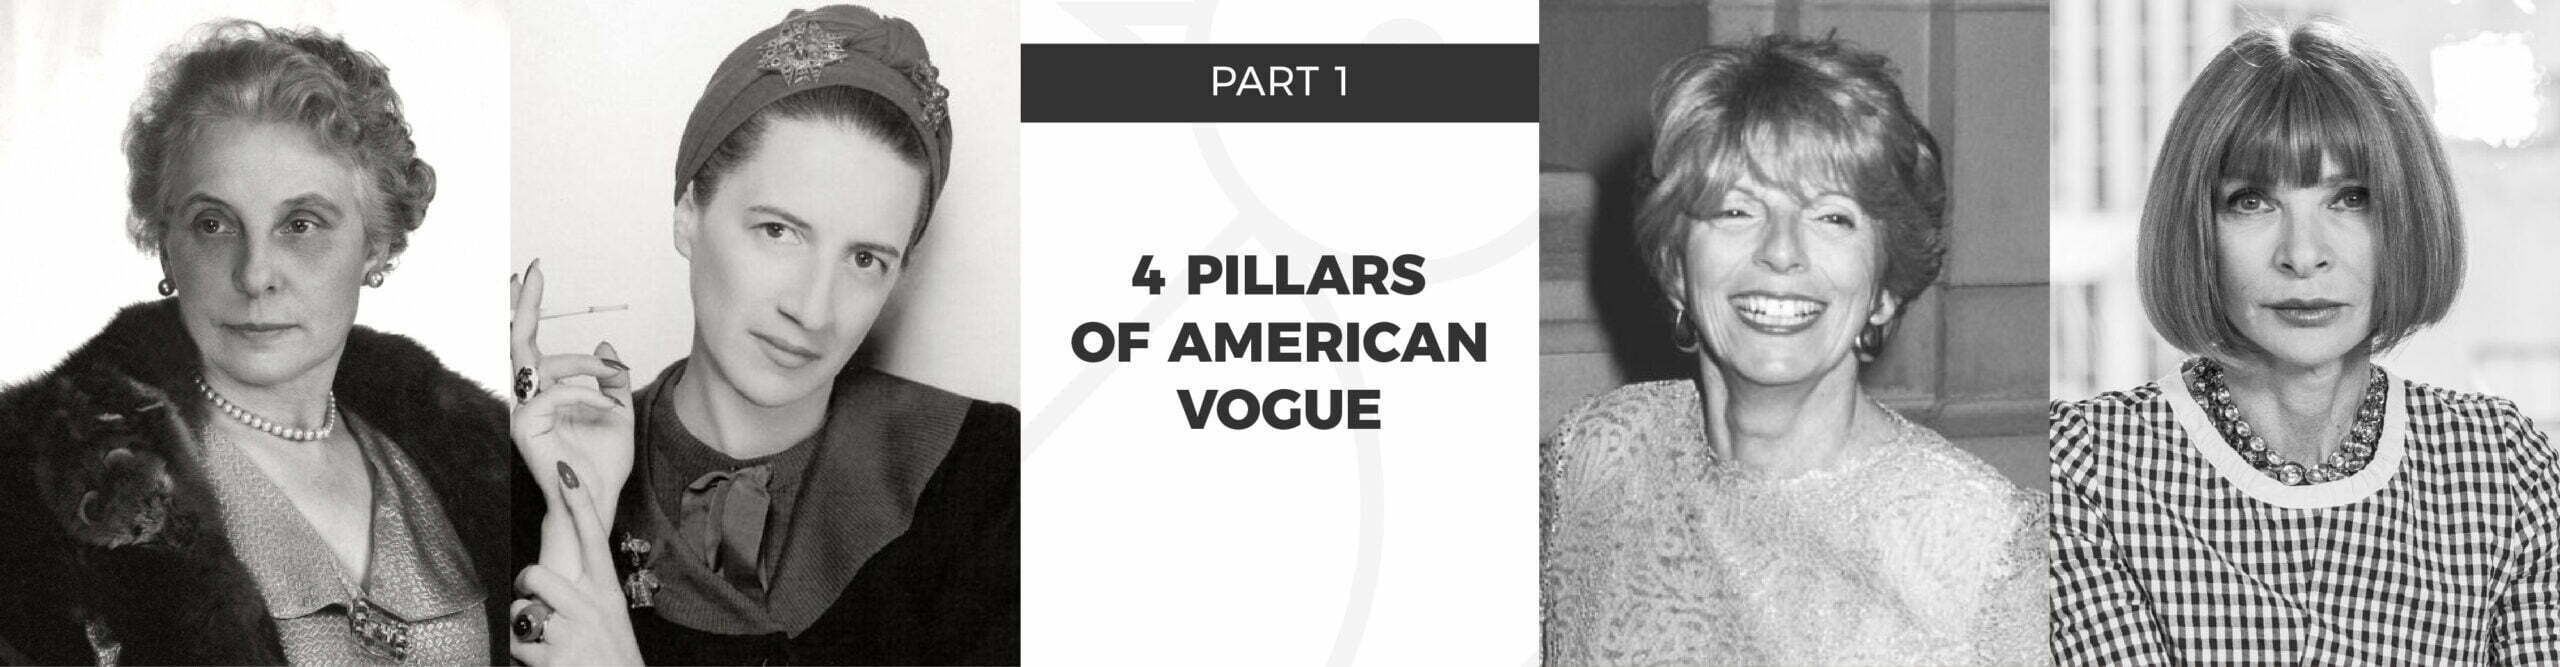 4 pillars of American Vogue